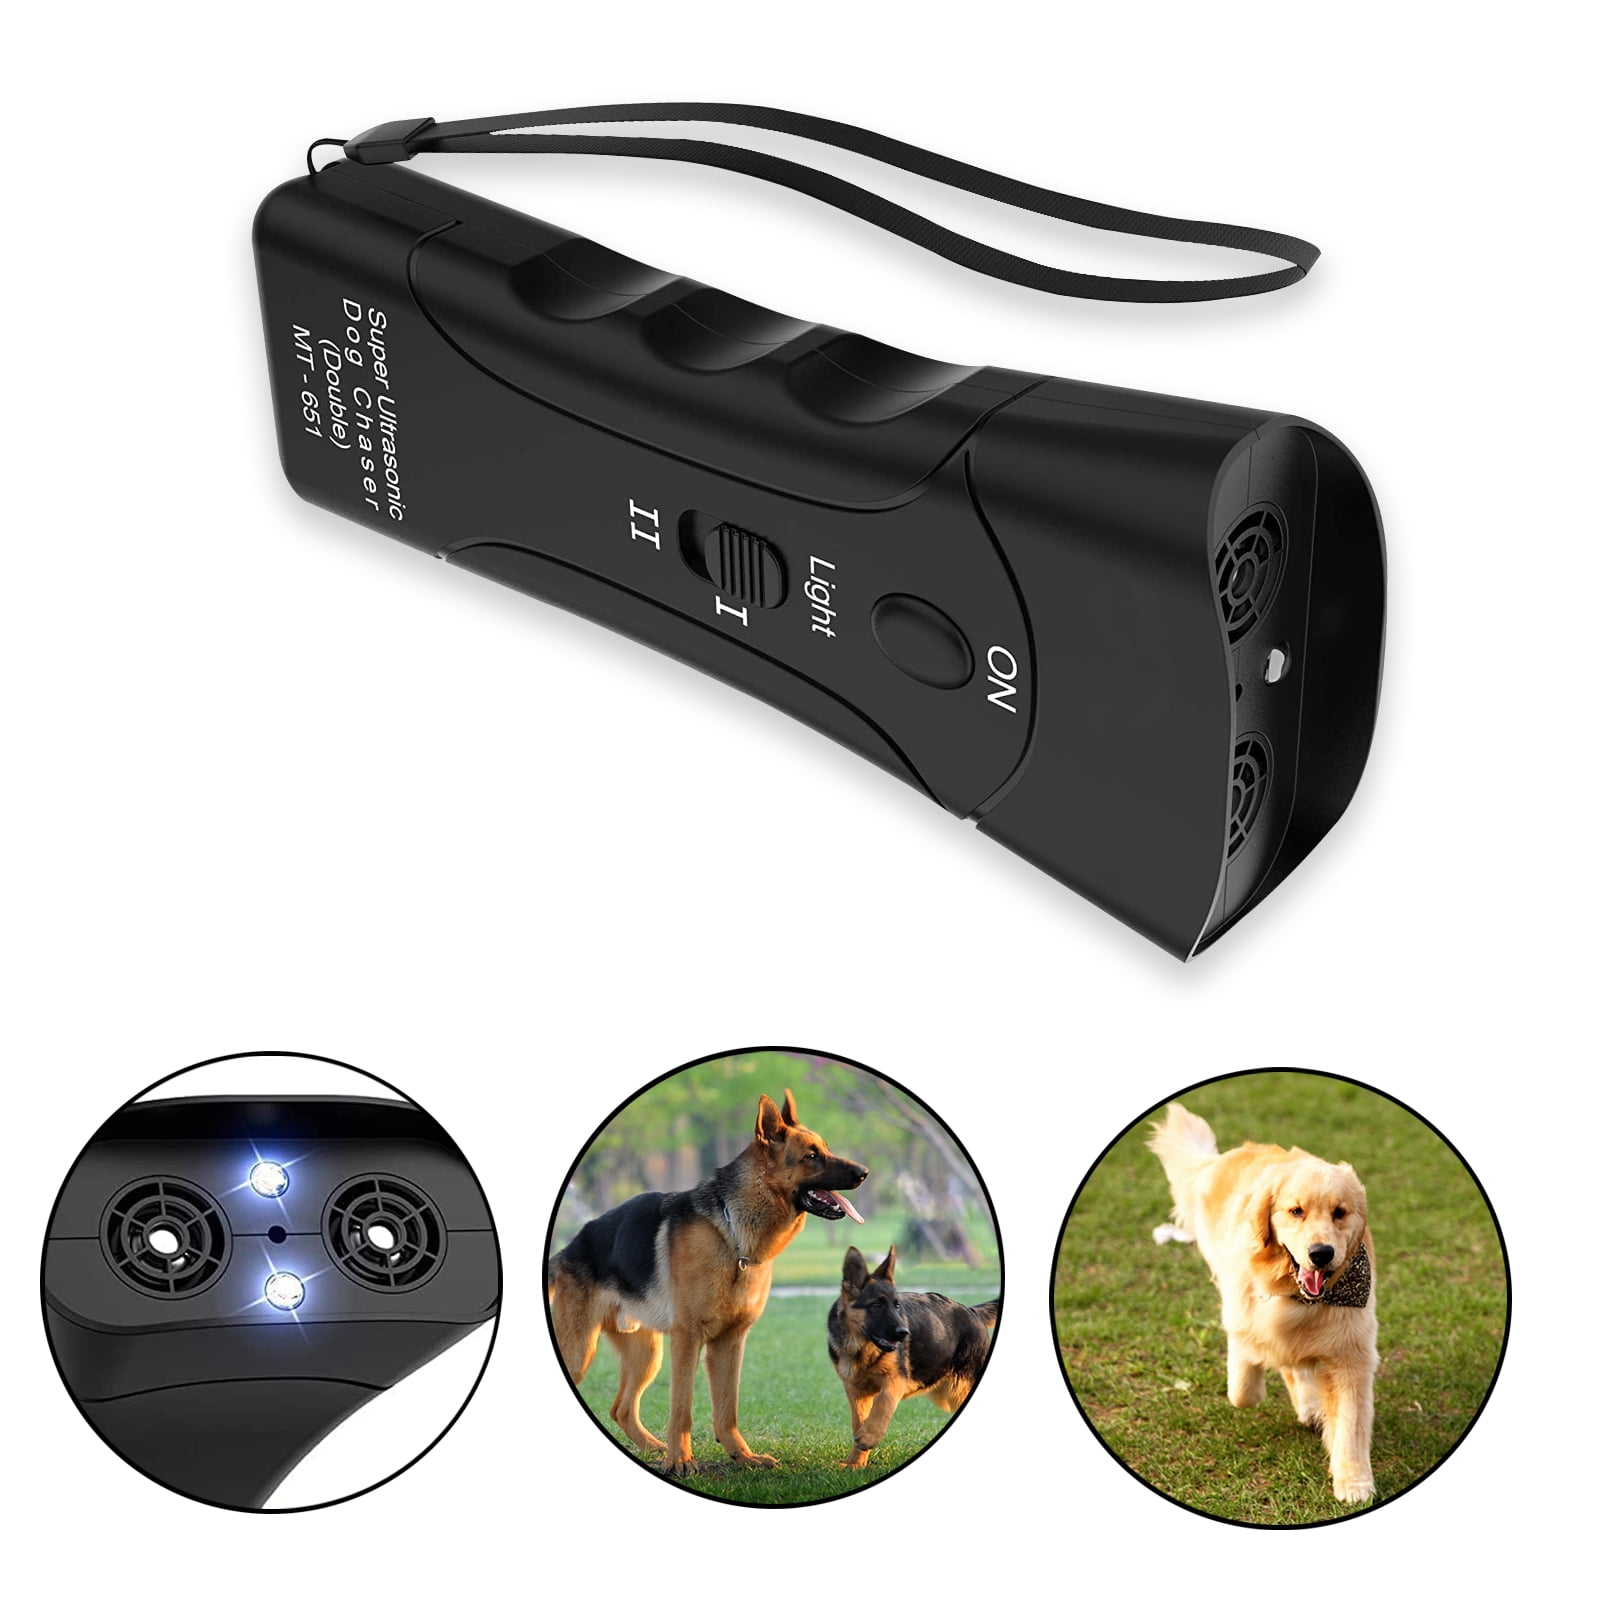 LED Ultrasonic Dog Repeller Electronic Anti Barking Stop Bark Handheld 3 in 1 Pet Dog Trainer with Flashlight Dog Training Device/Dog Deterrent/Training Tool/Stop Barking